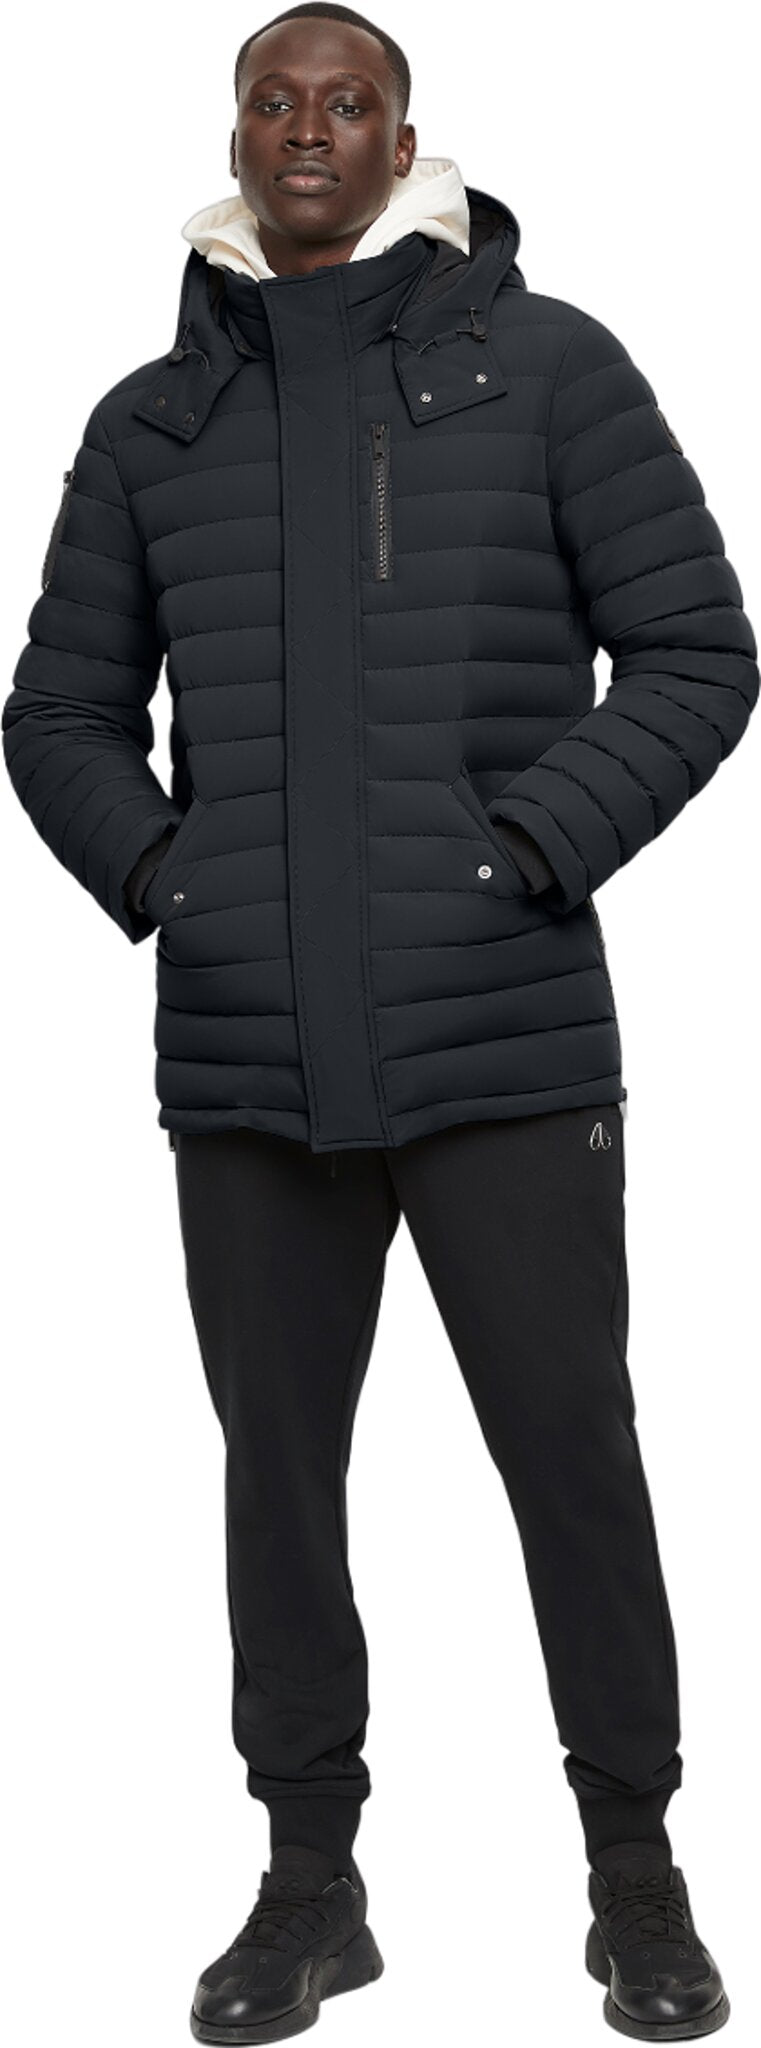 Men's Avalanche Wear Fleece Knit Jacket Size XL, Dark Gray Zippered Pockets  